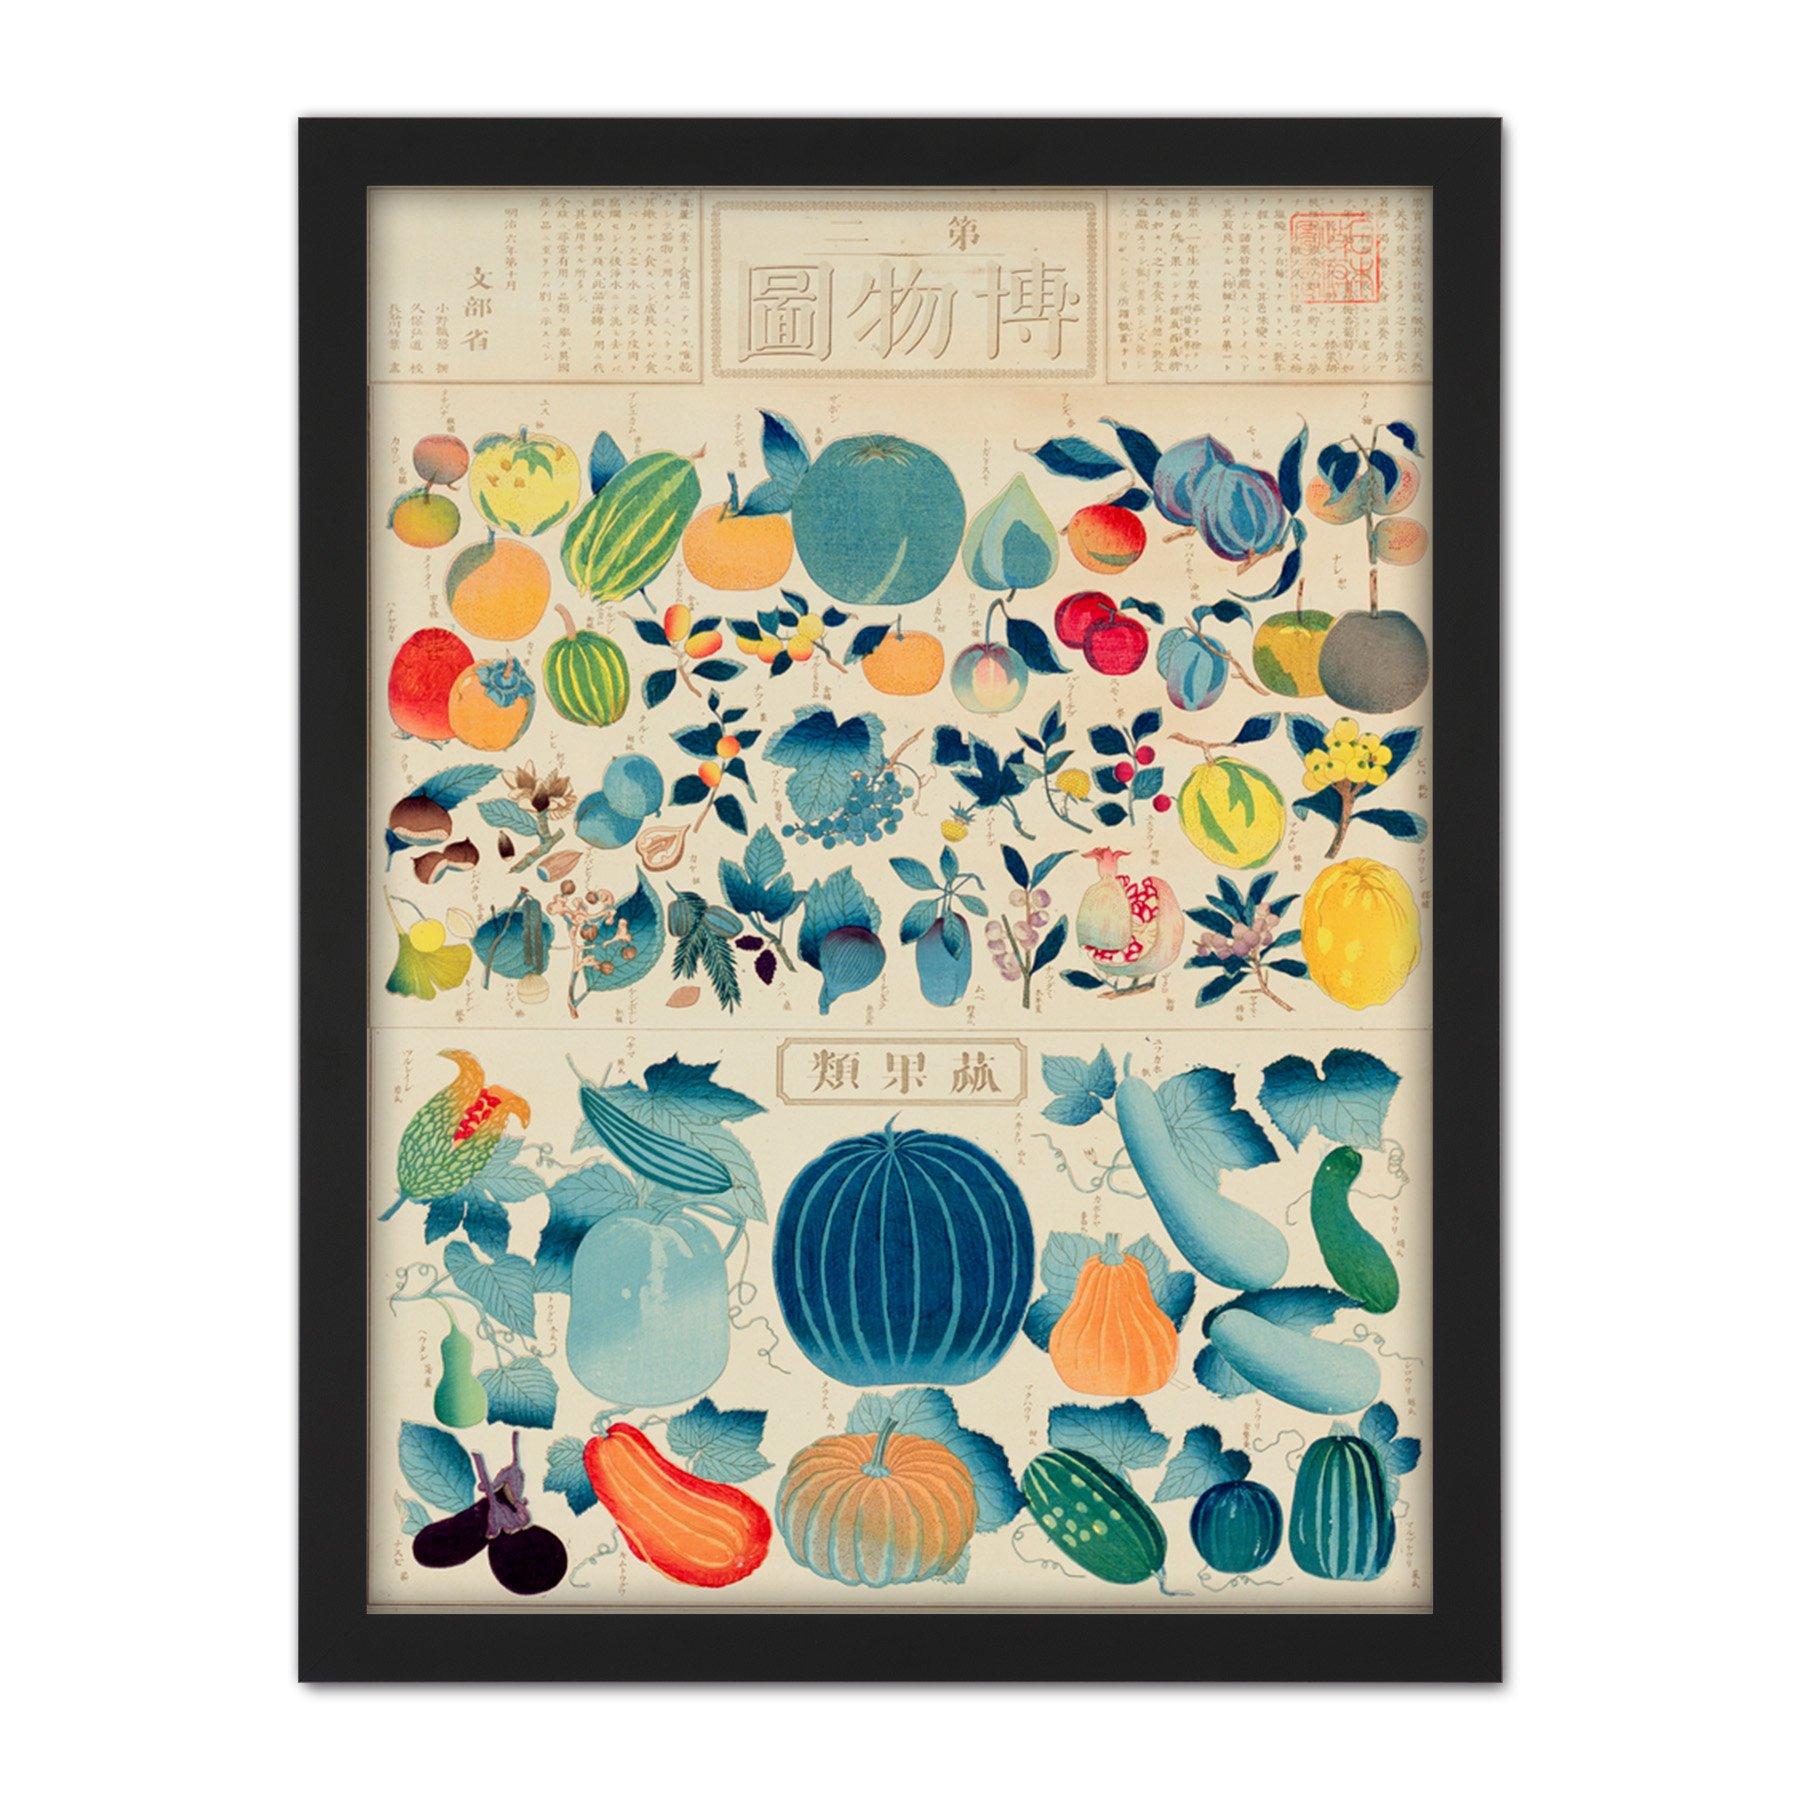 Kato Chikusai Species of Fruit Vegetables Japan Large Framed Wall Decor Art Print